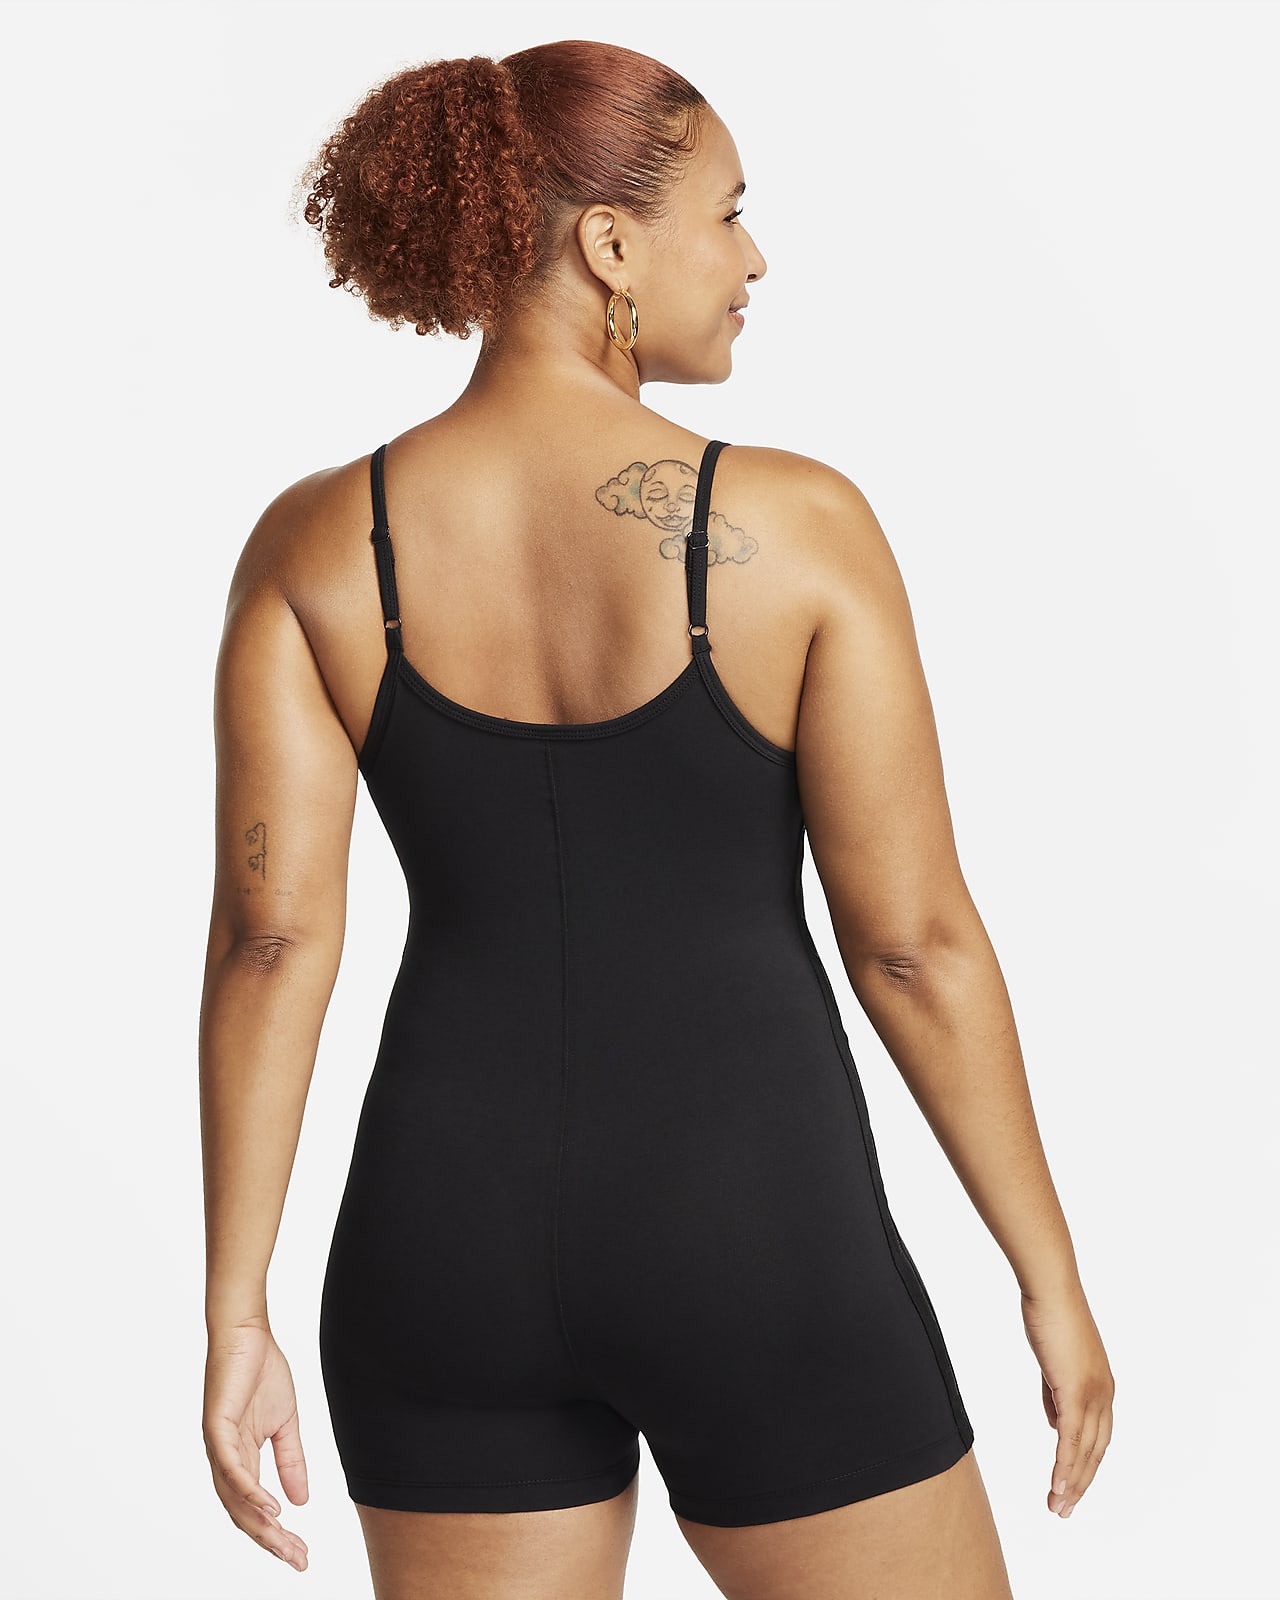 Women's Bodysuits. Nike SI